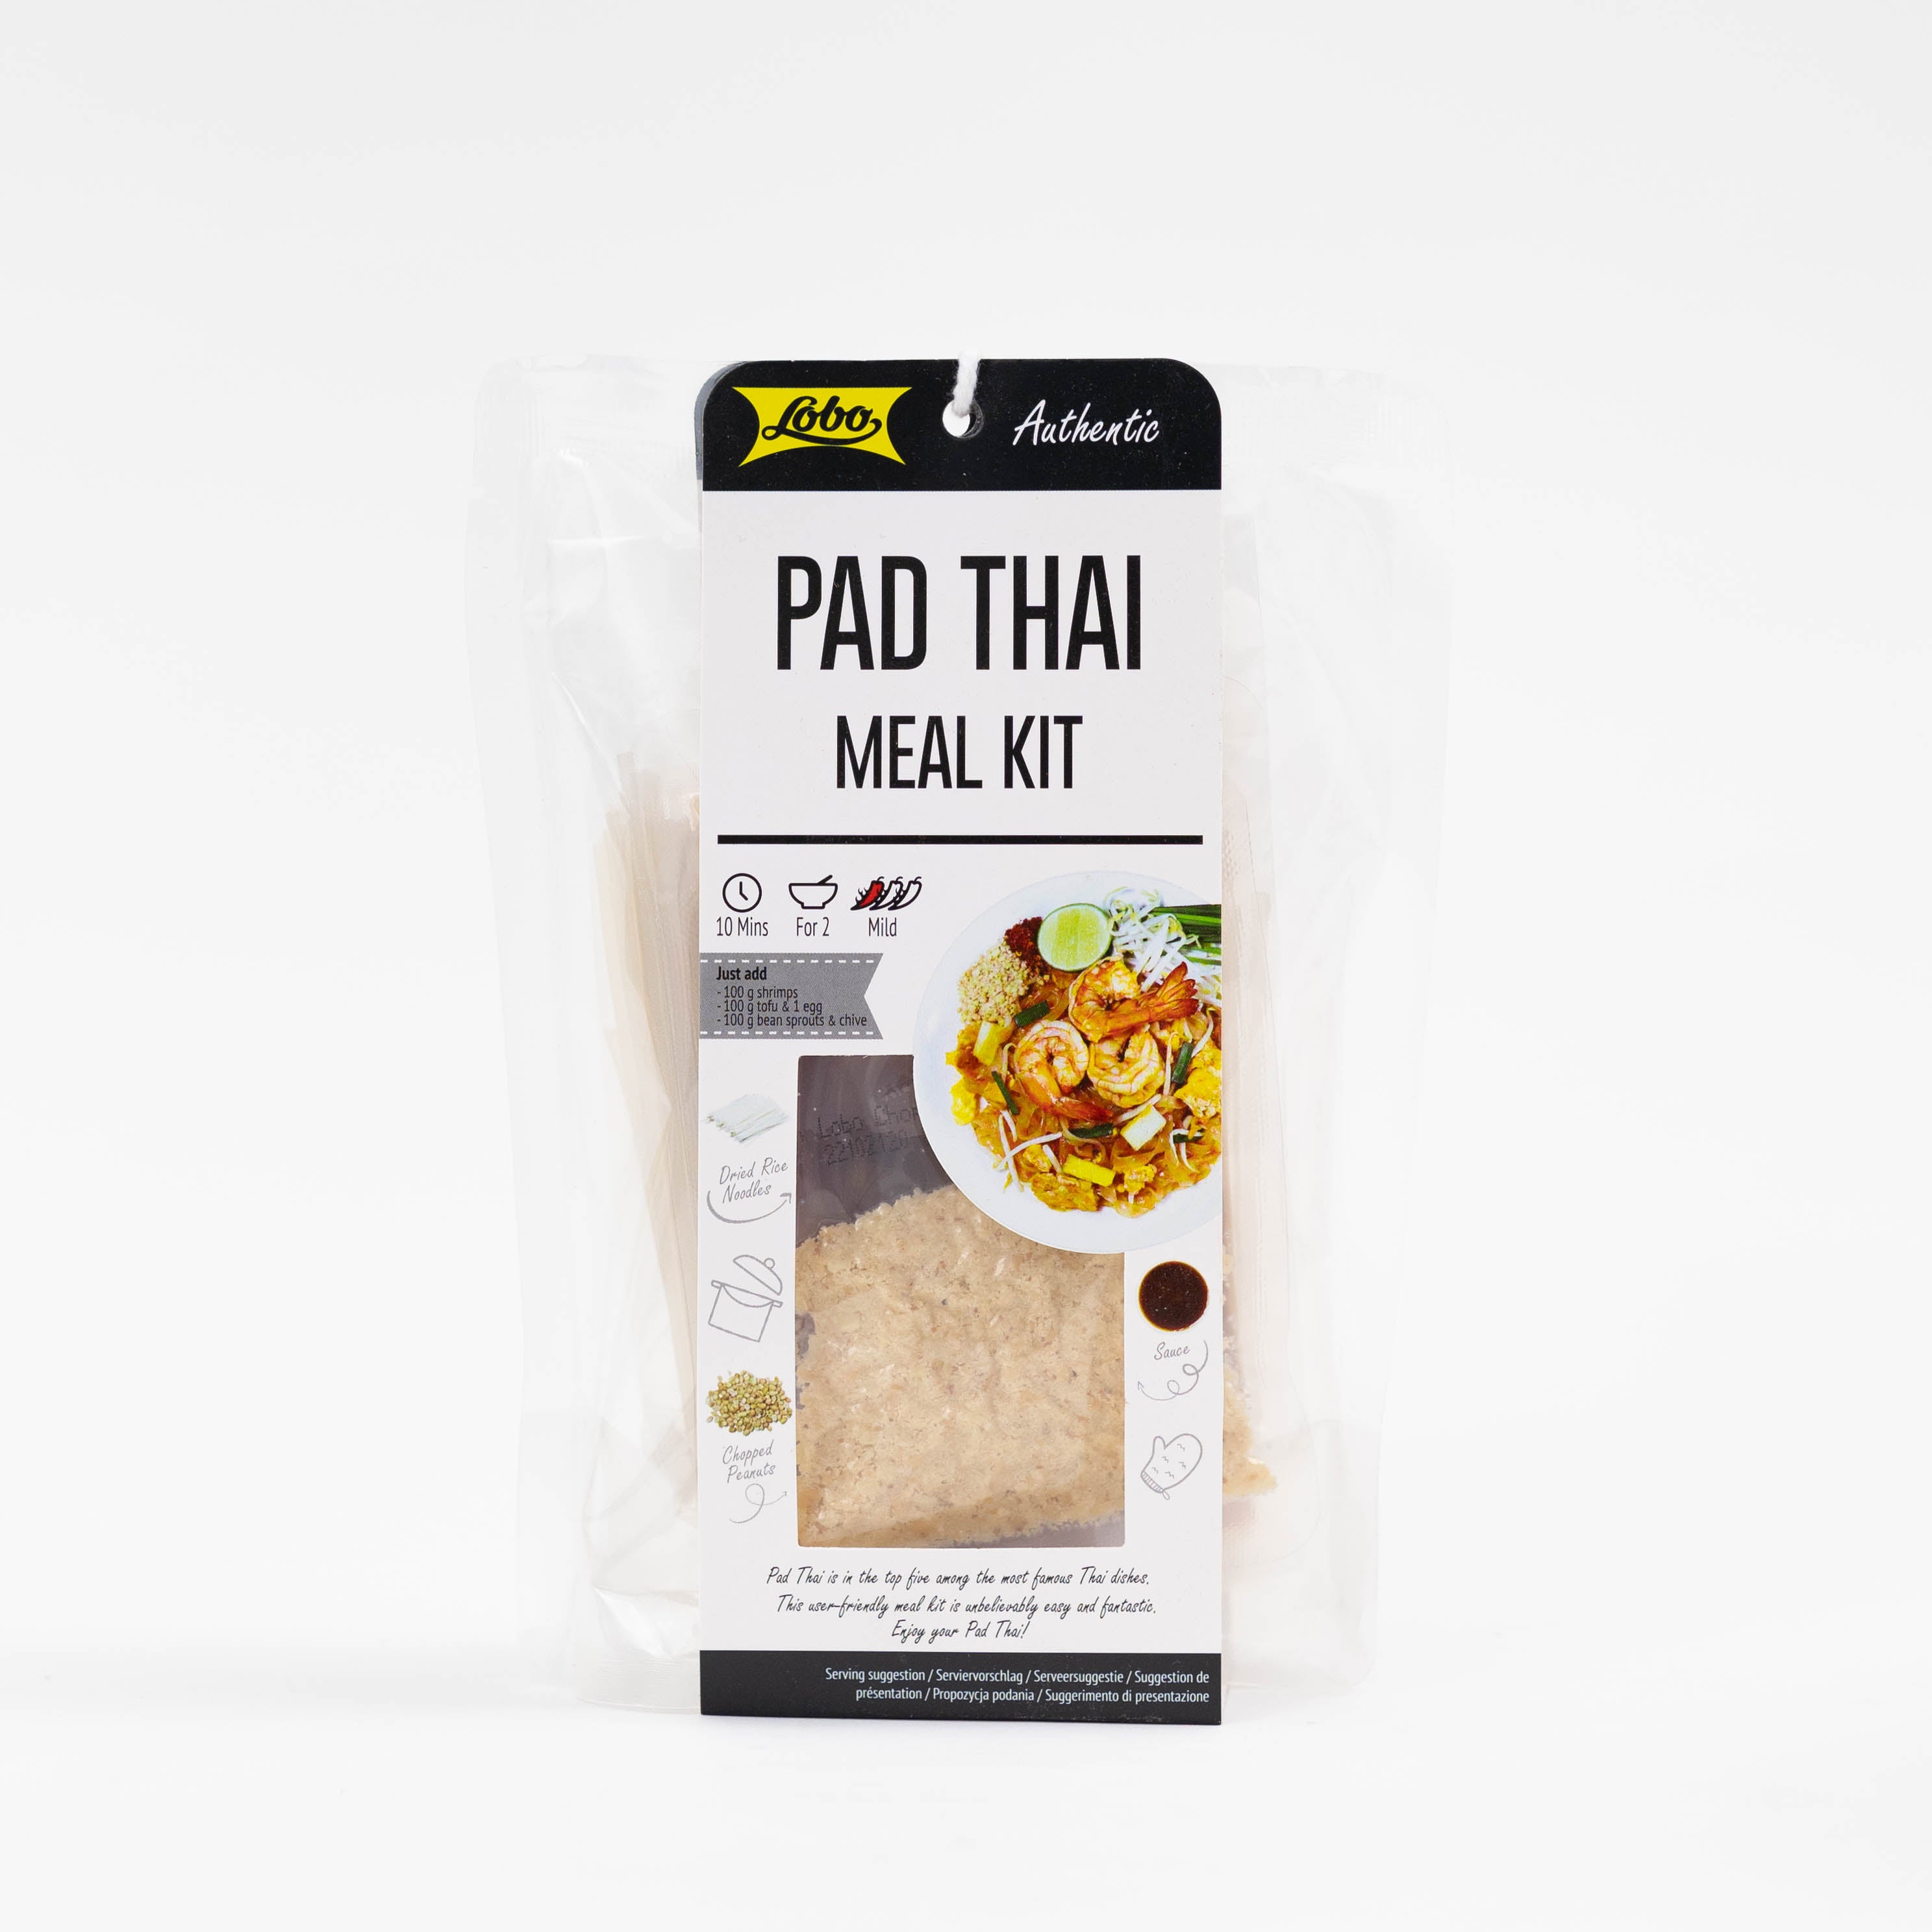 asiashop onlineshop dinese.de pad thai meal kit authentic lobo asiatische lebensmittel